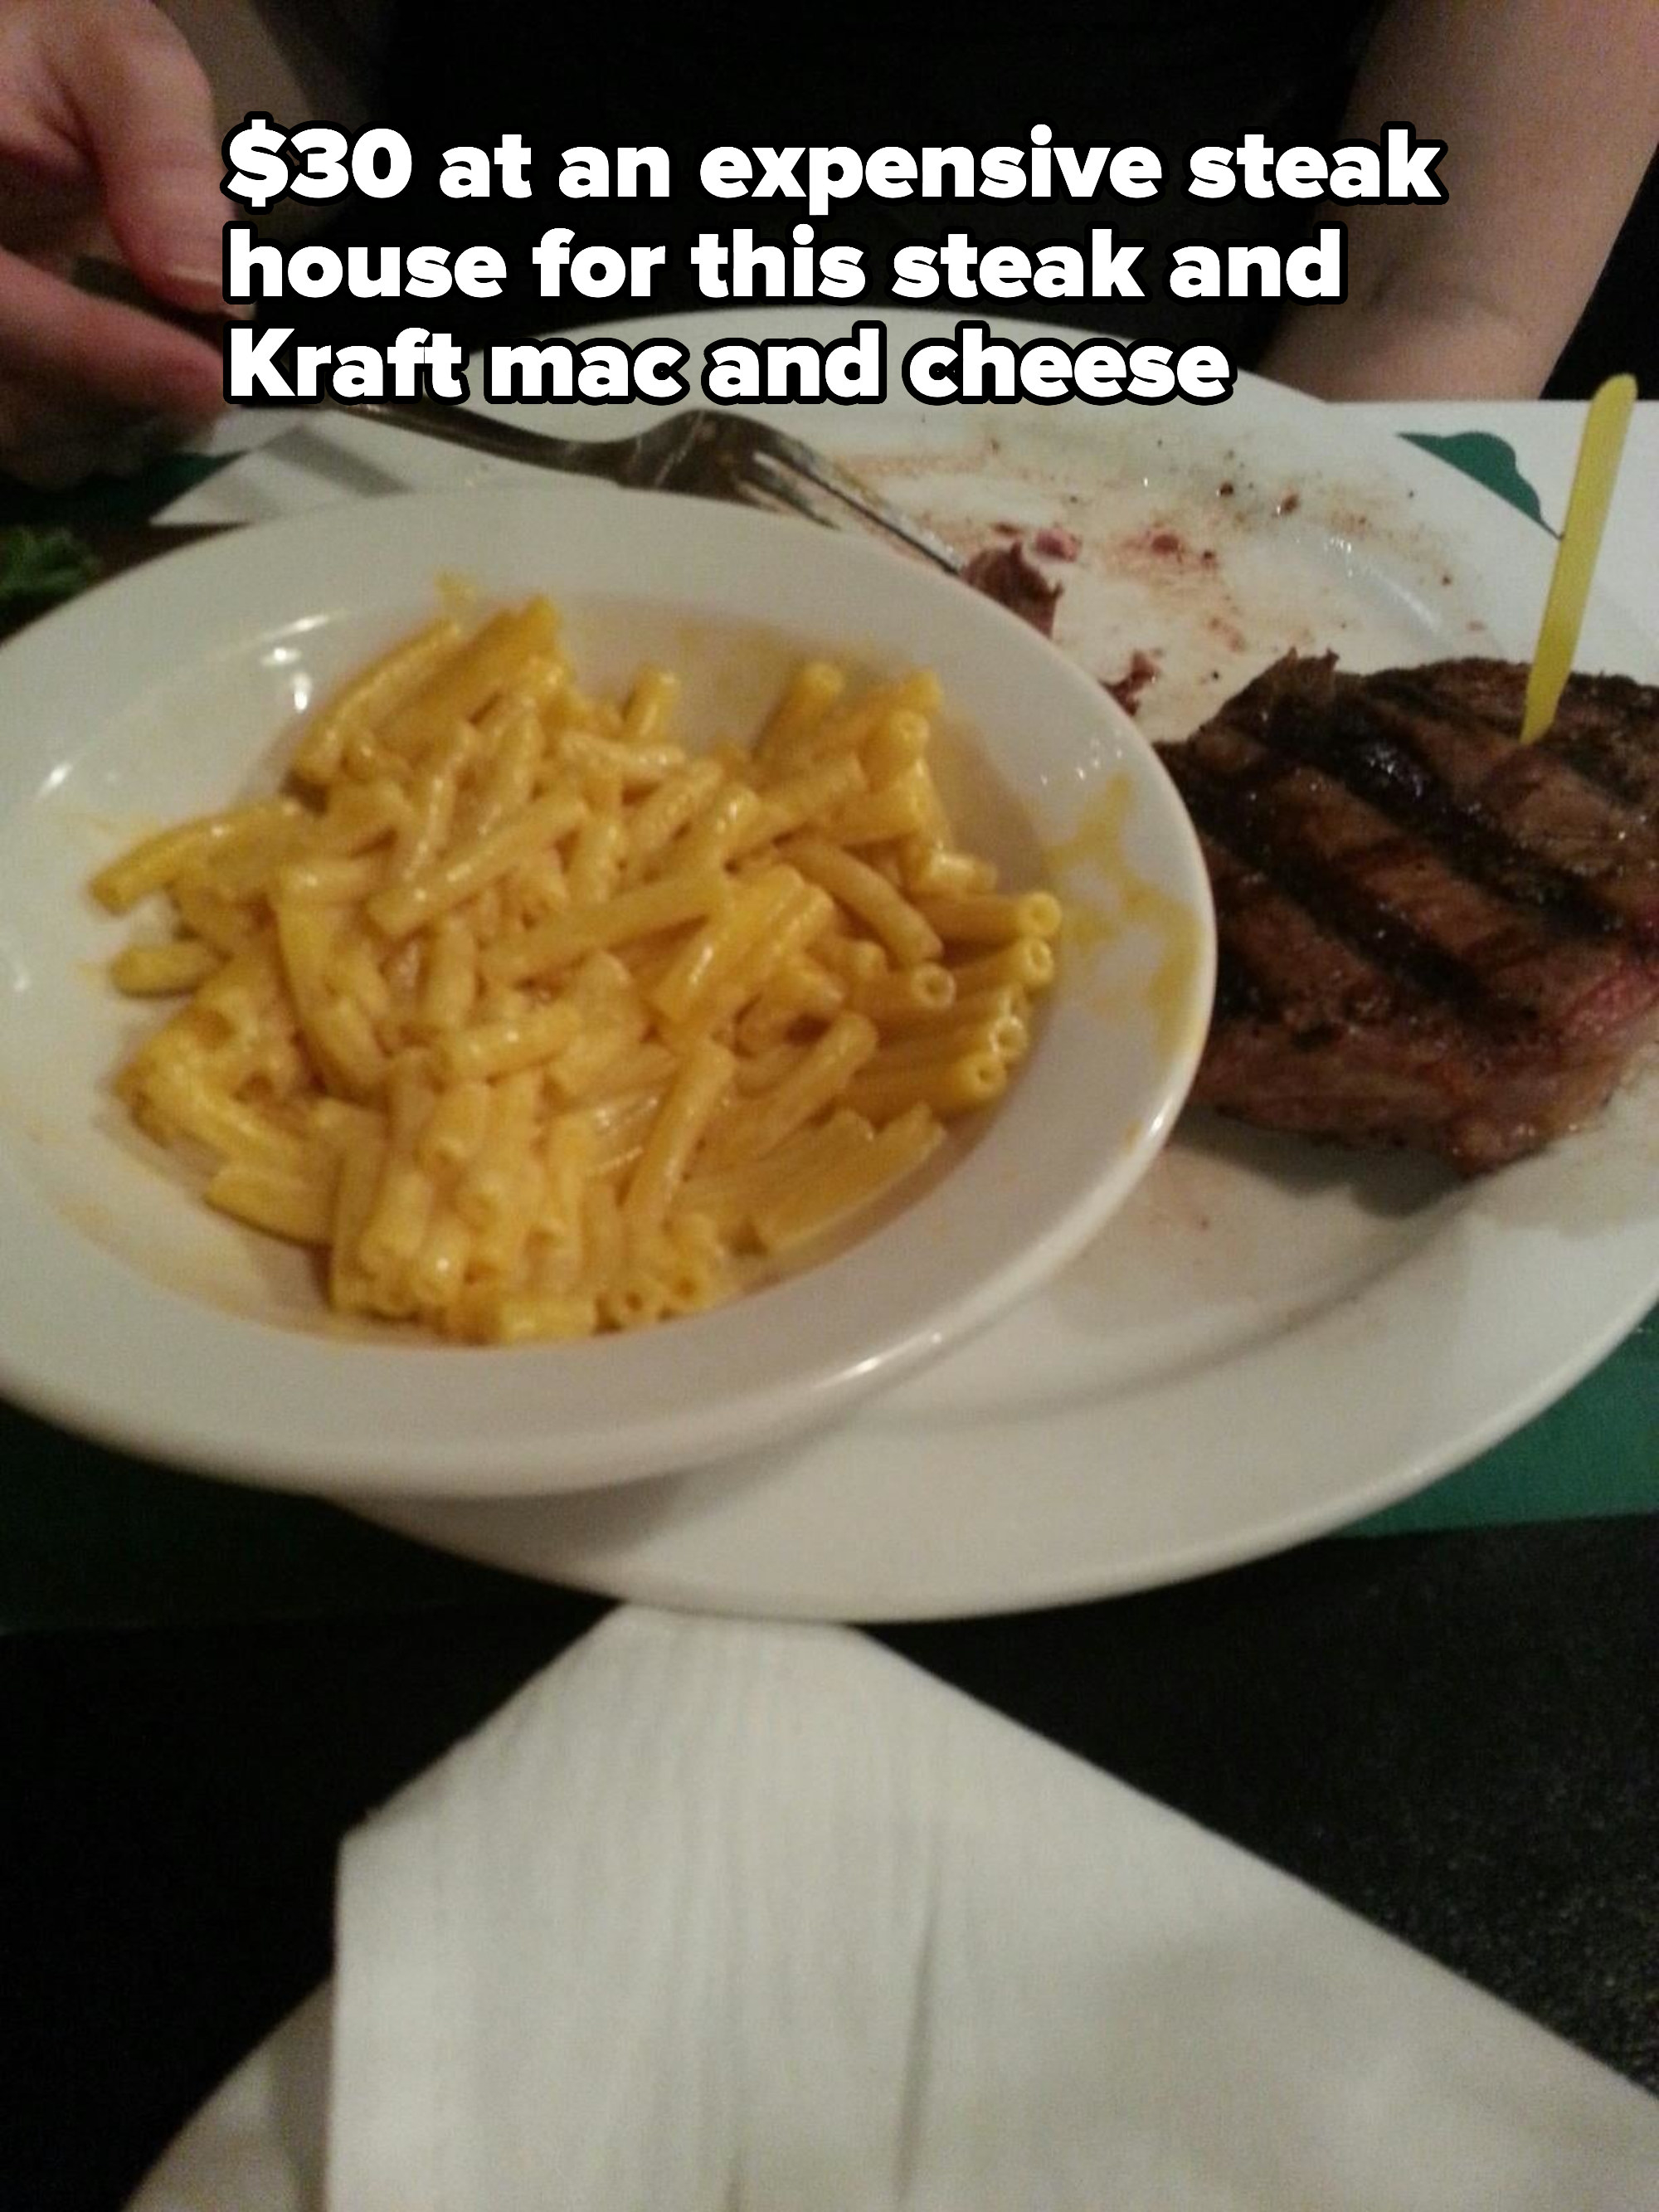 kraft mac and cheese and a steak